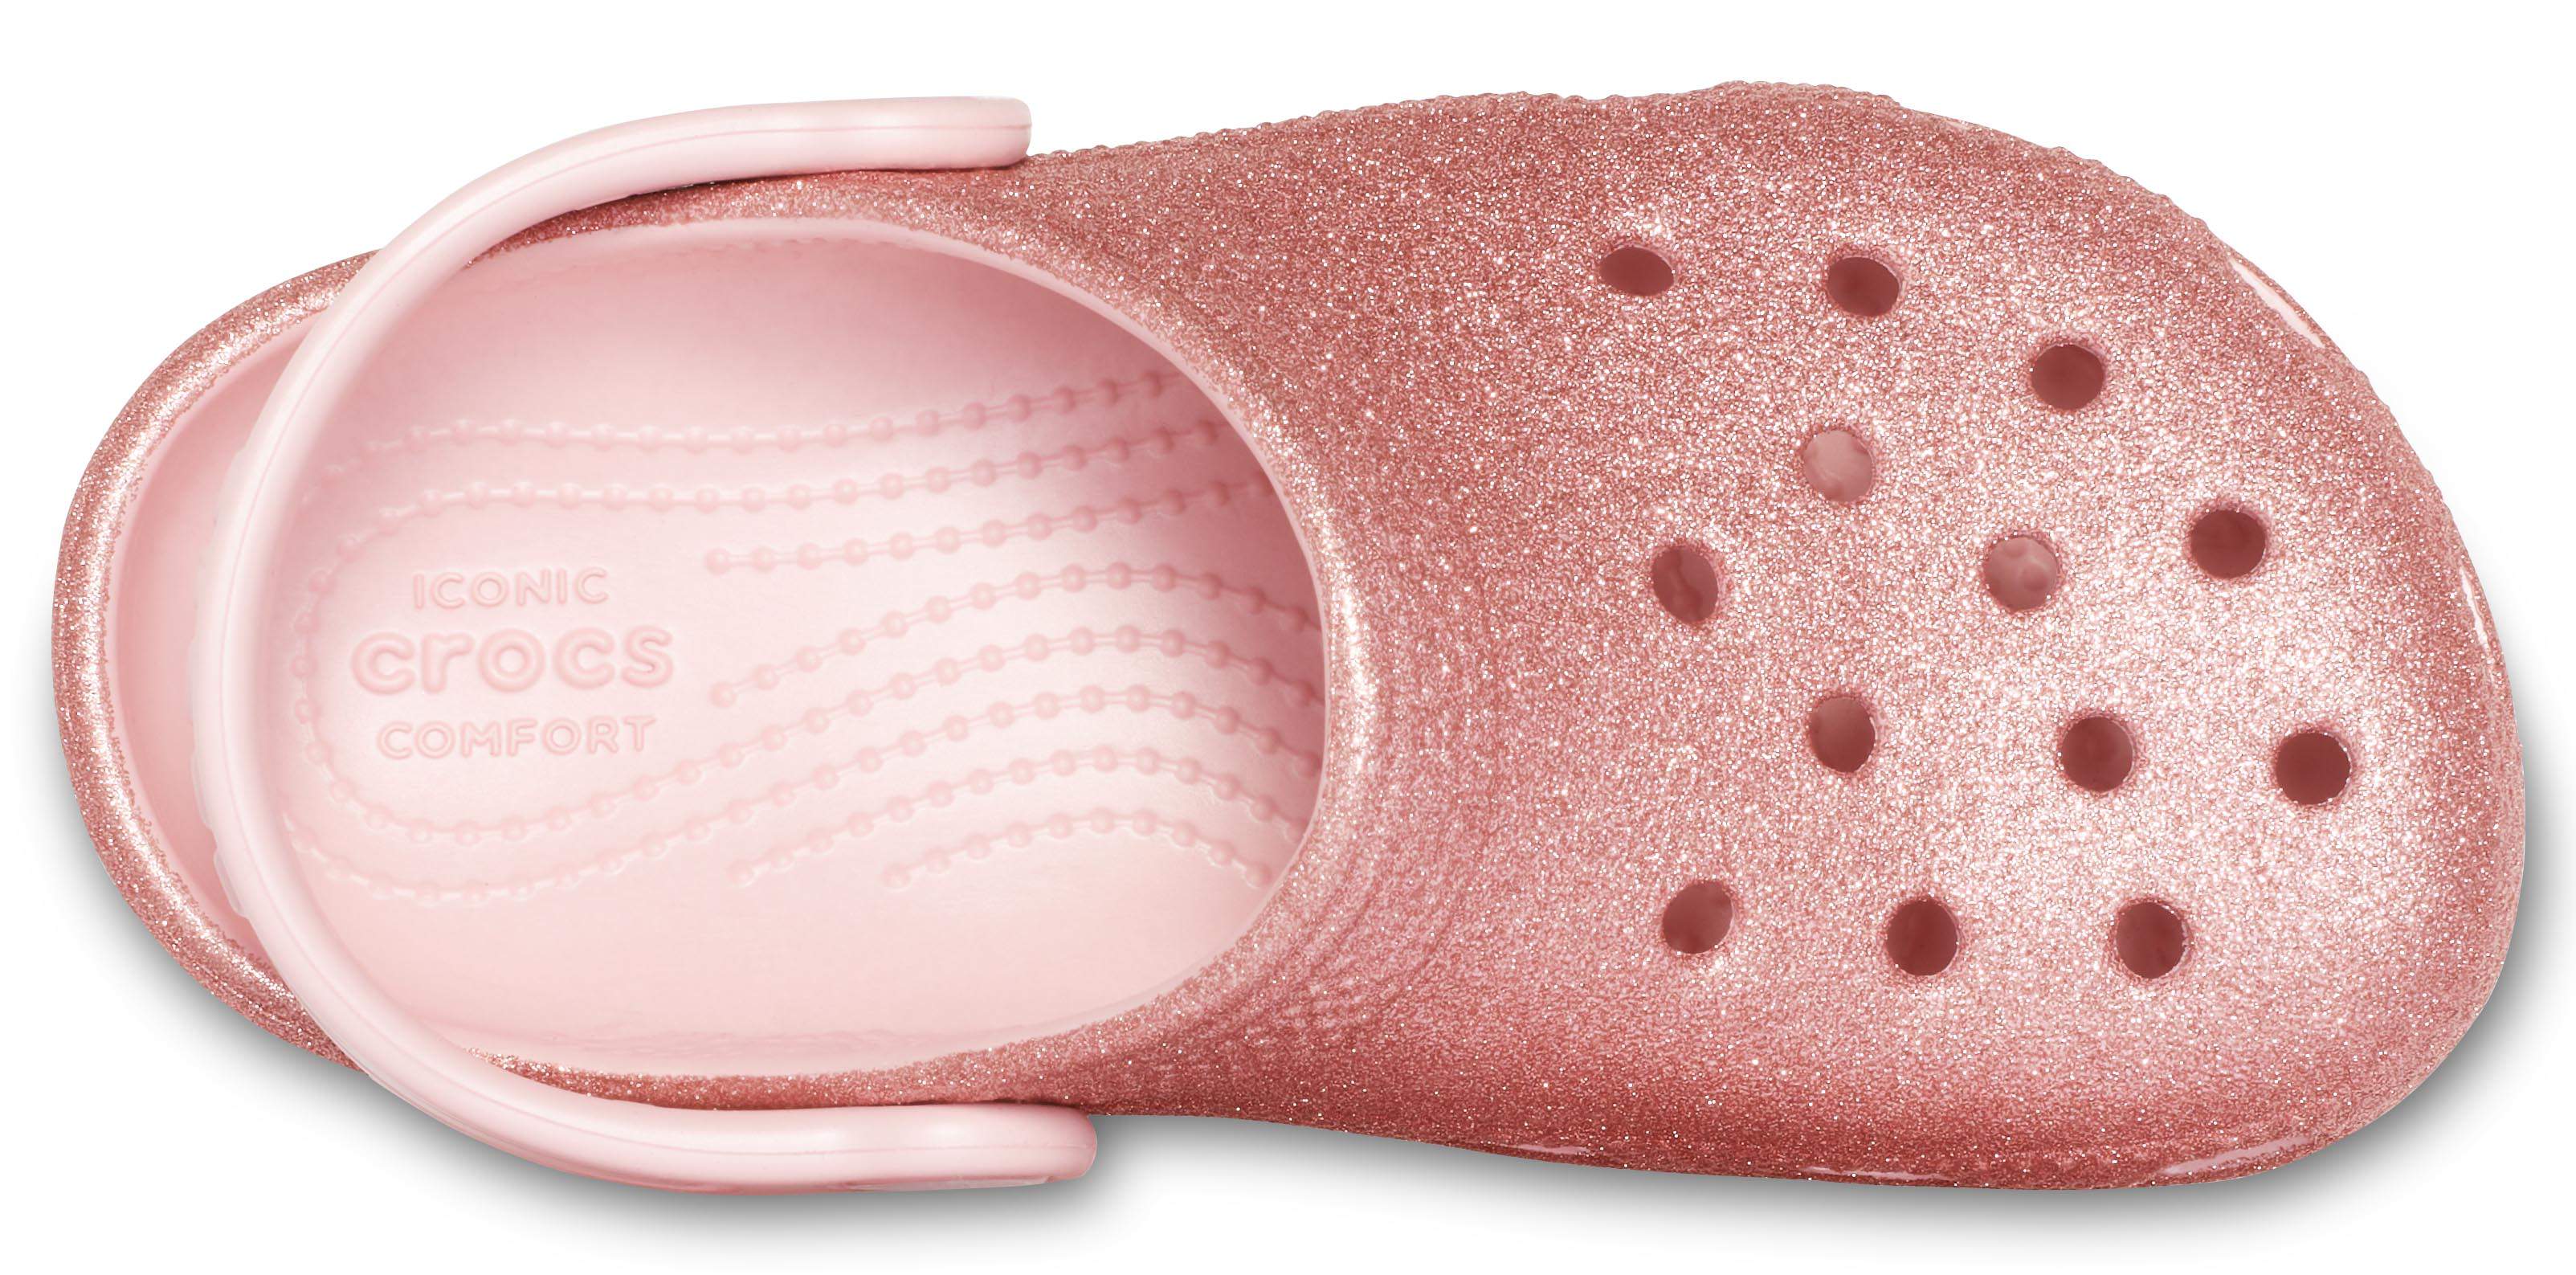 sparkling crocs